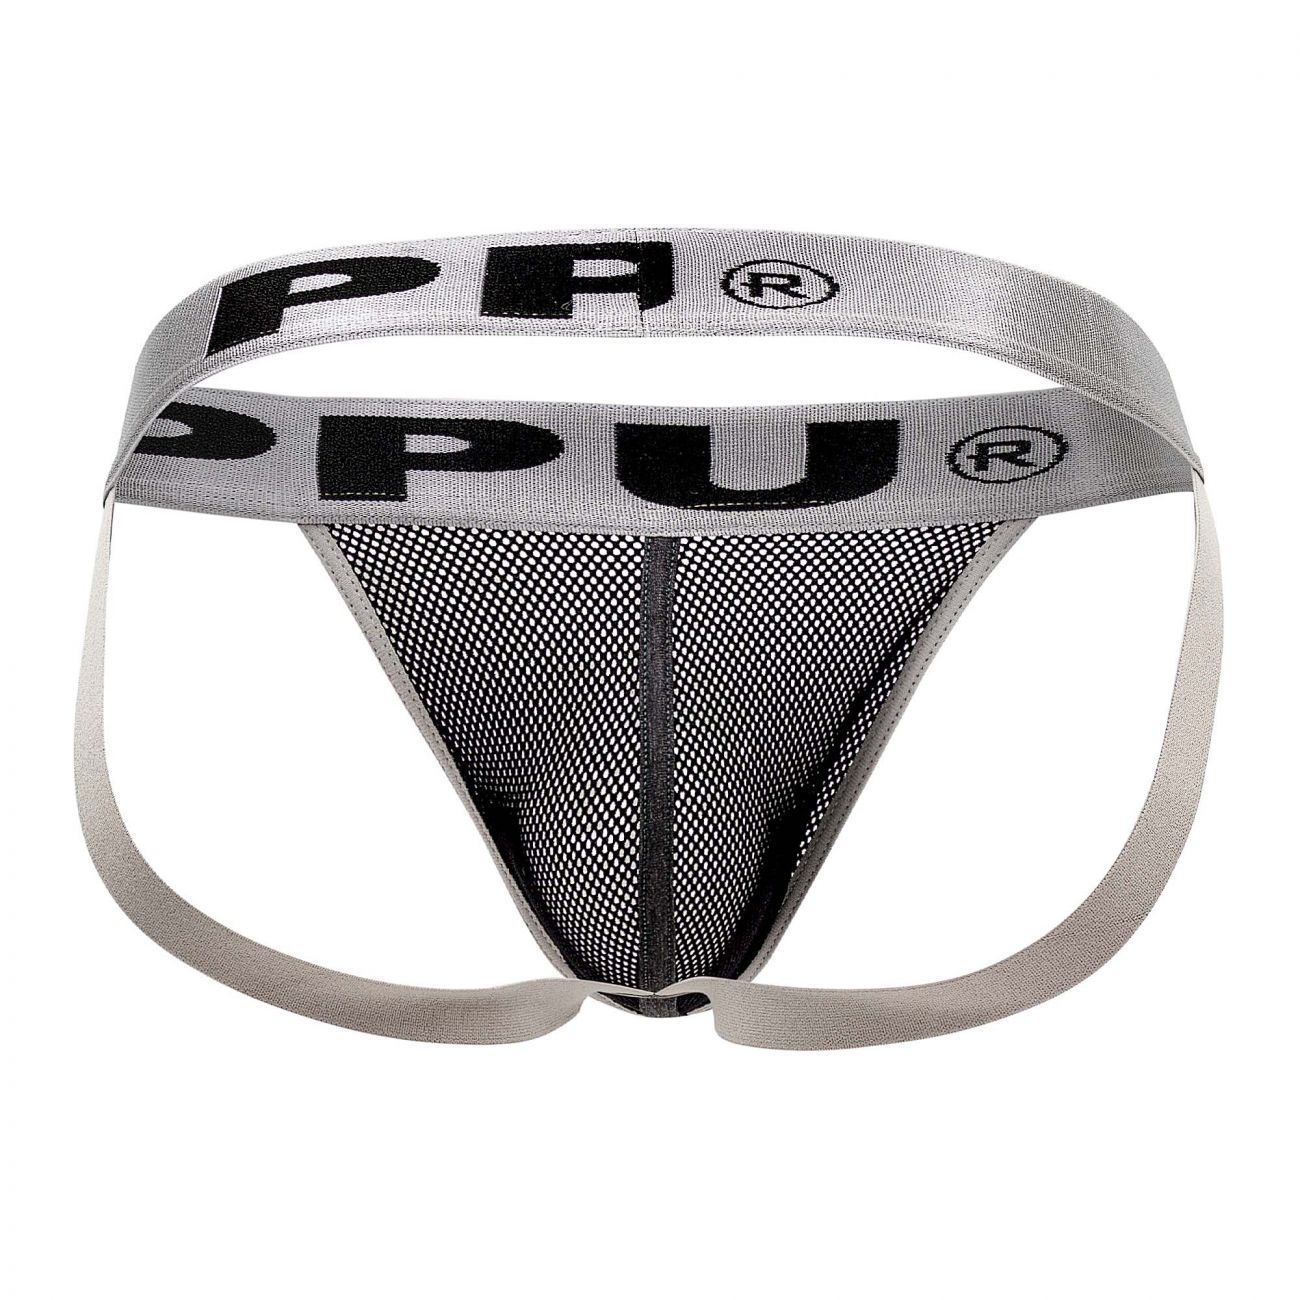 PPU Underwear Fashion Jockstraps for Men | eBay